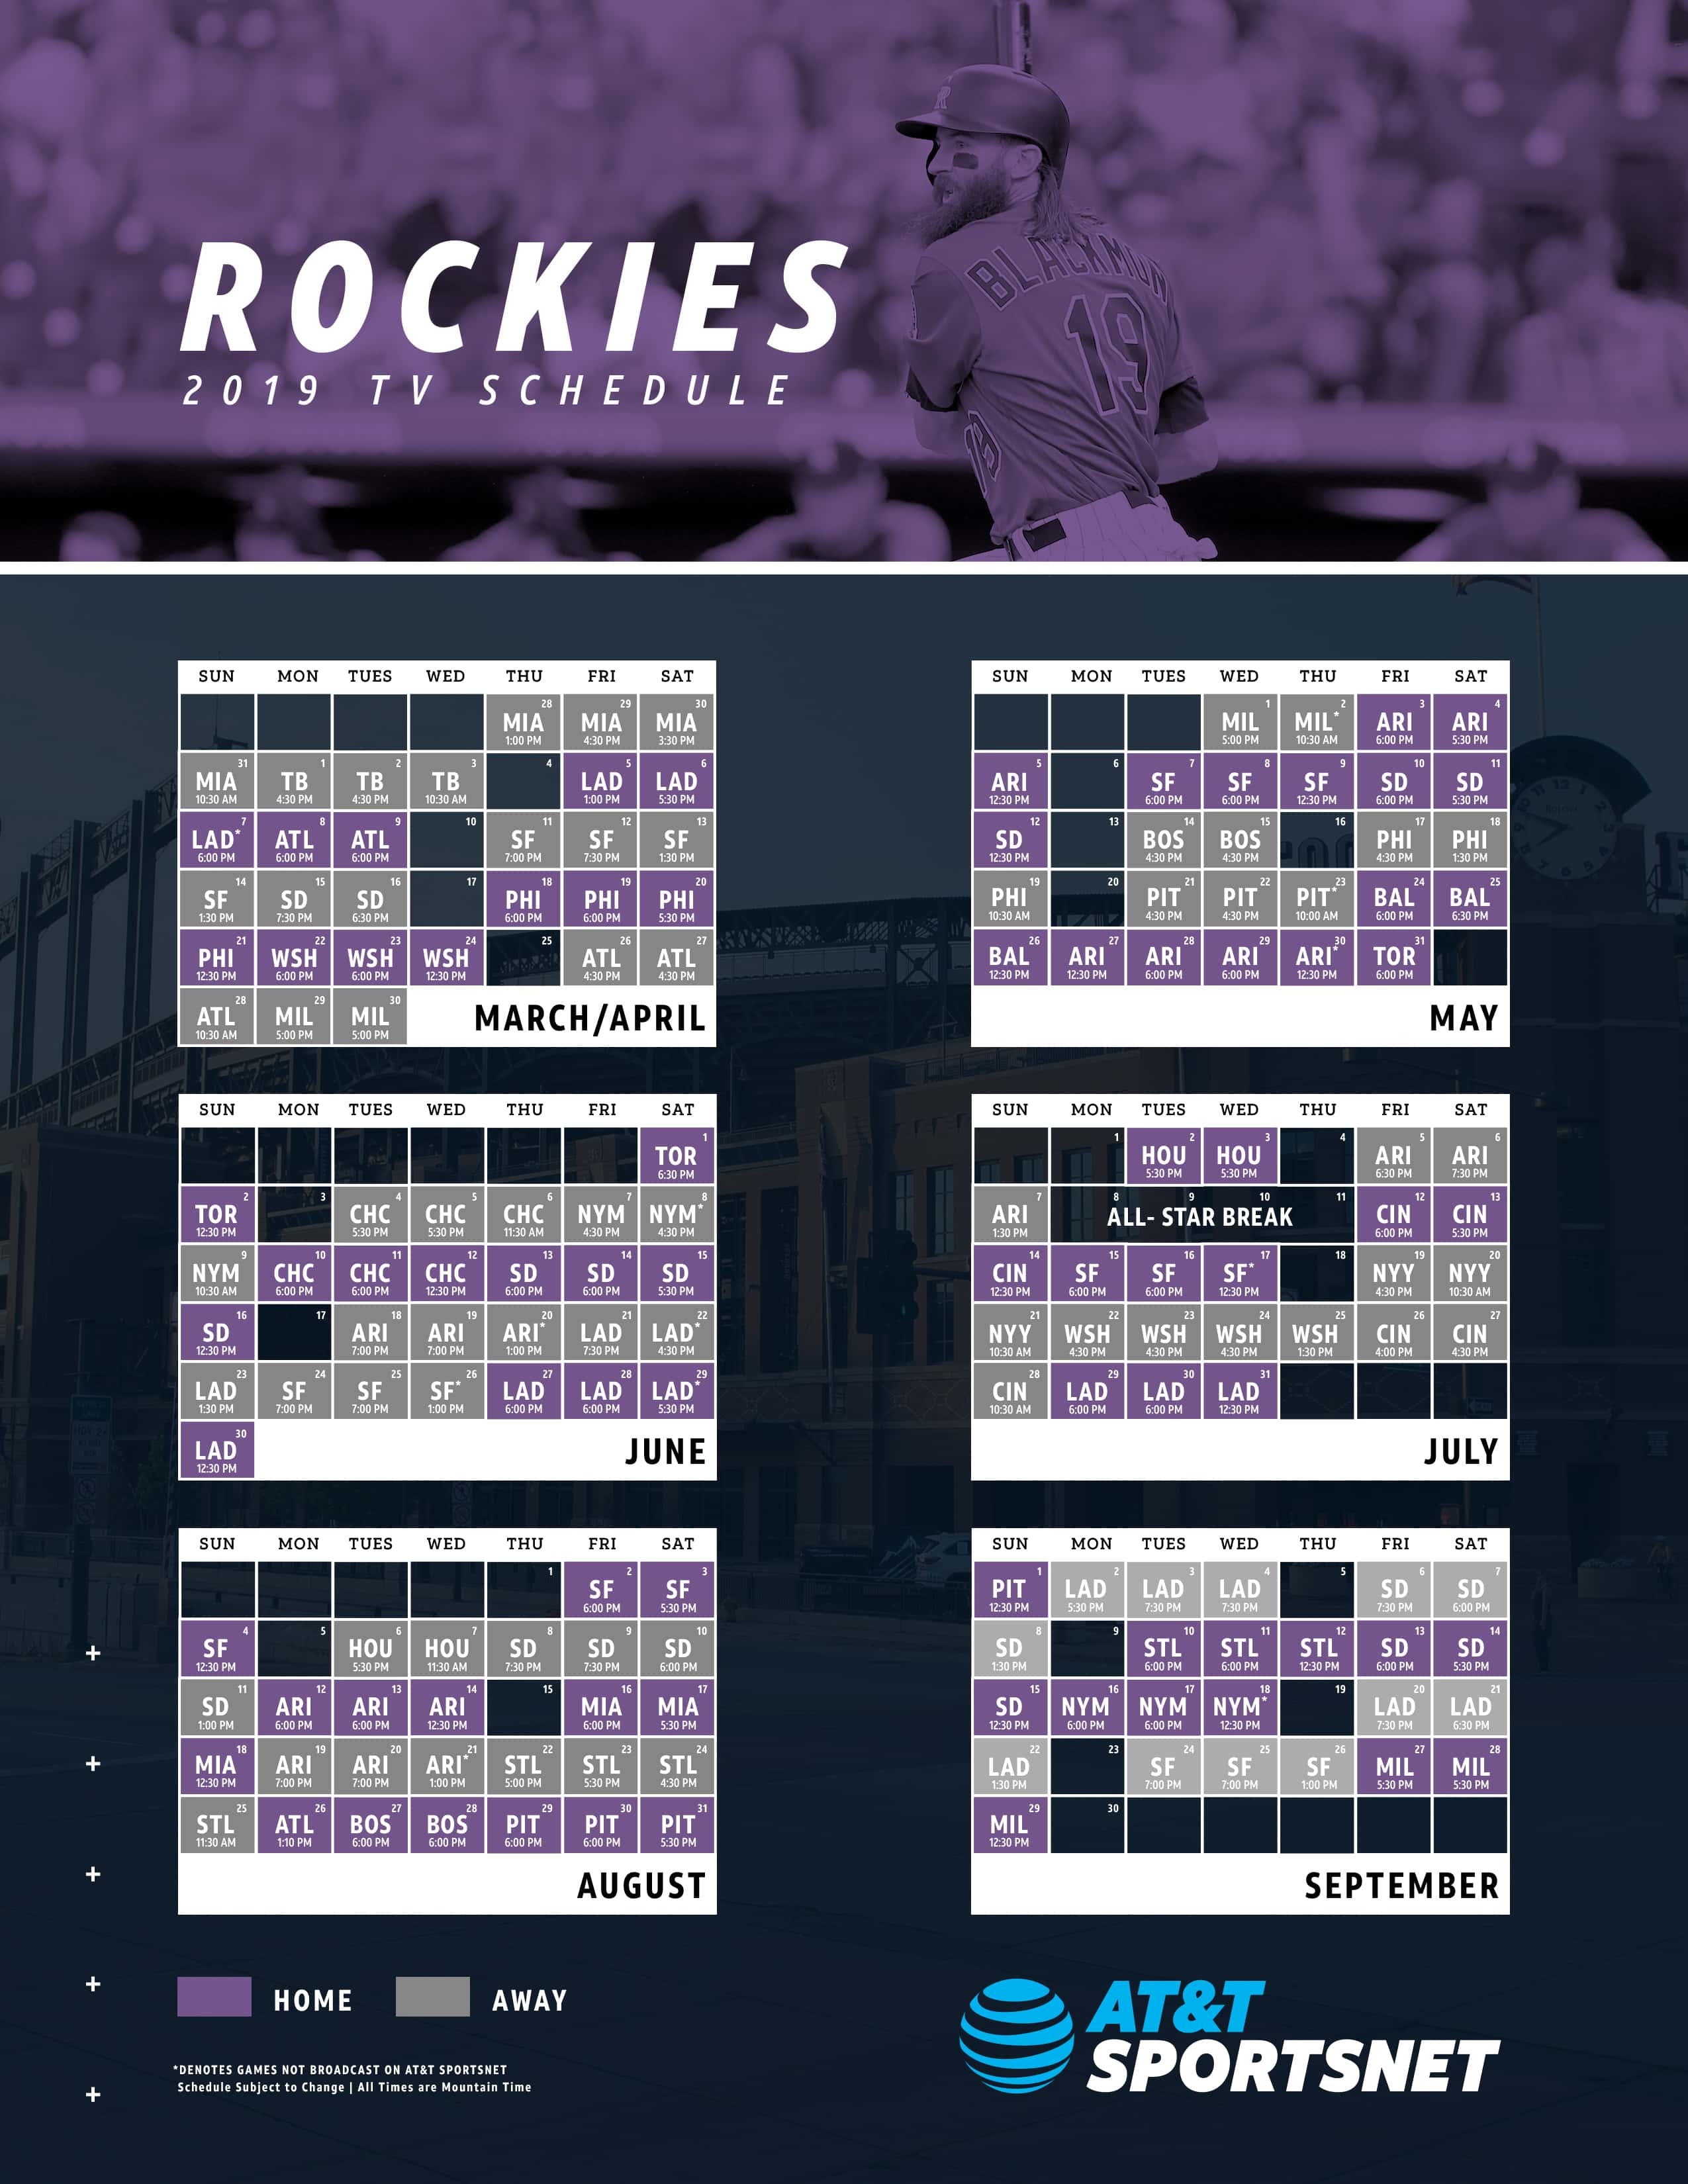 Rockies Opening Day 2019 Schedule change comin